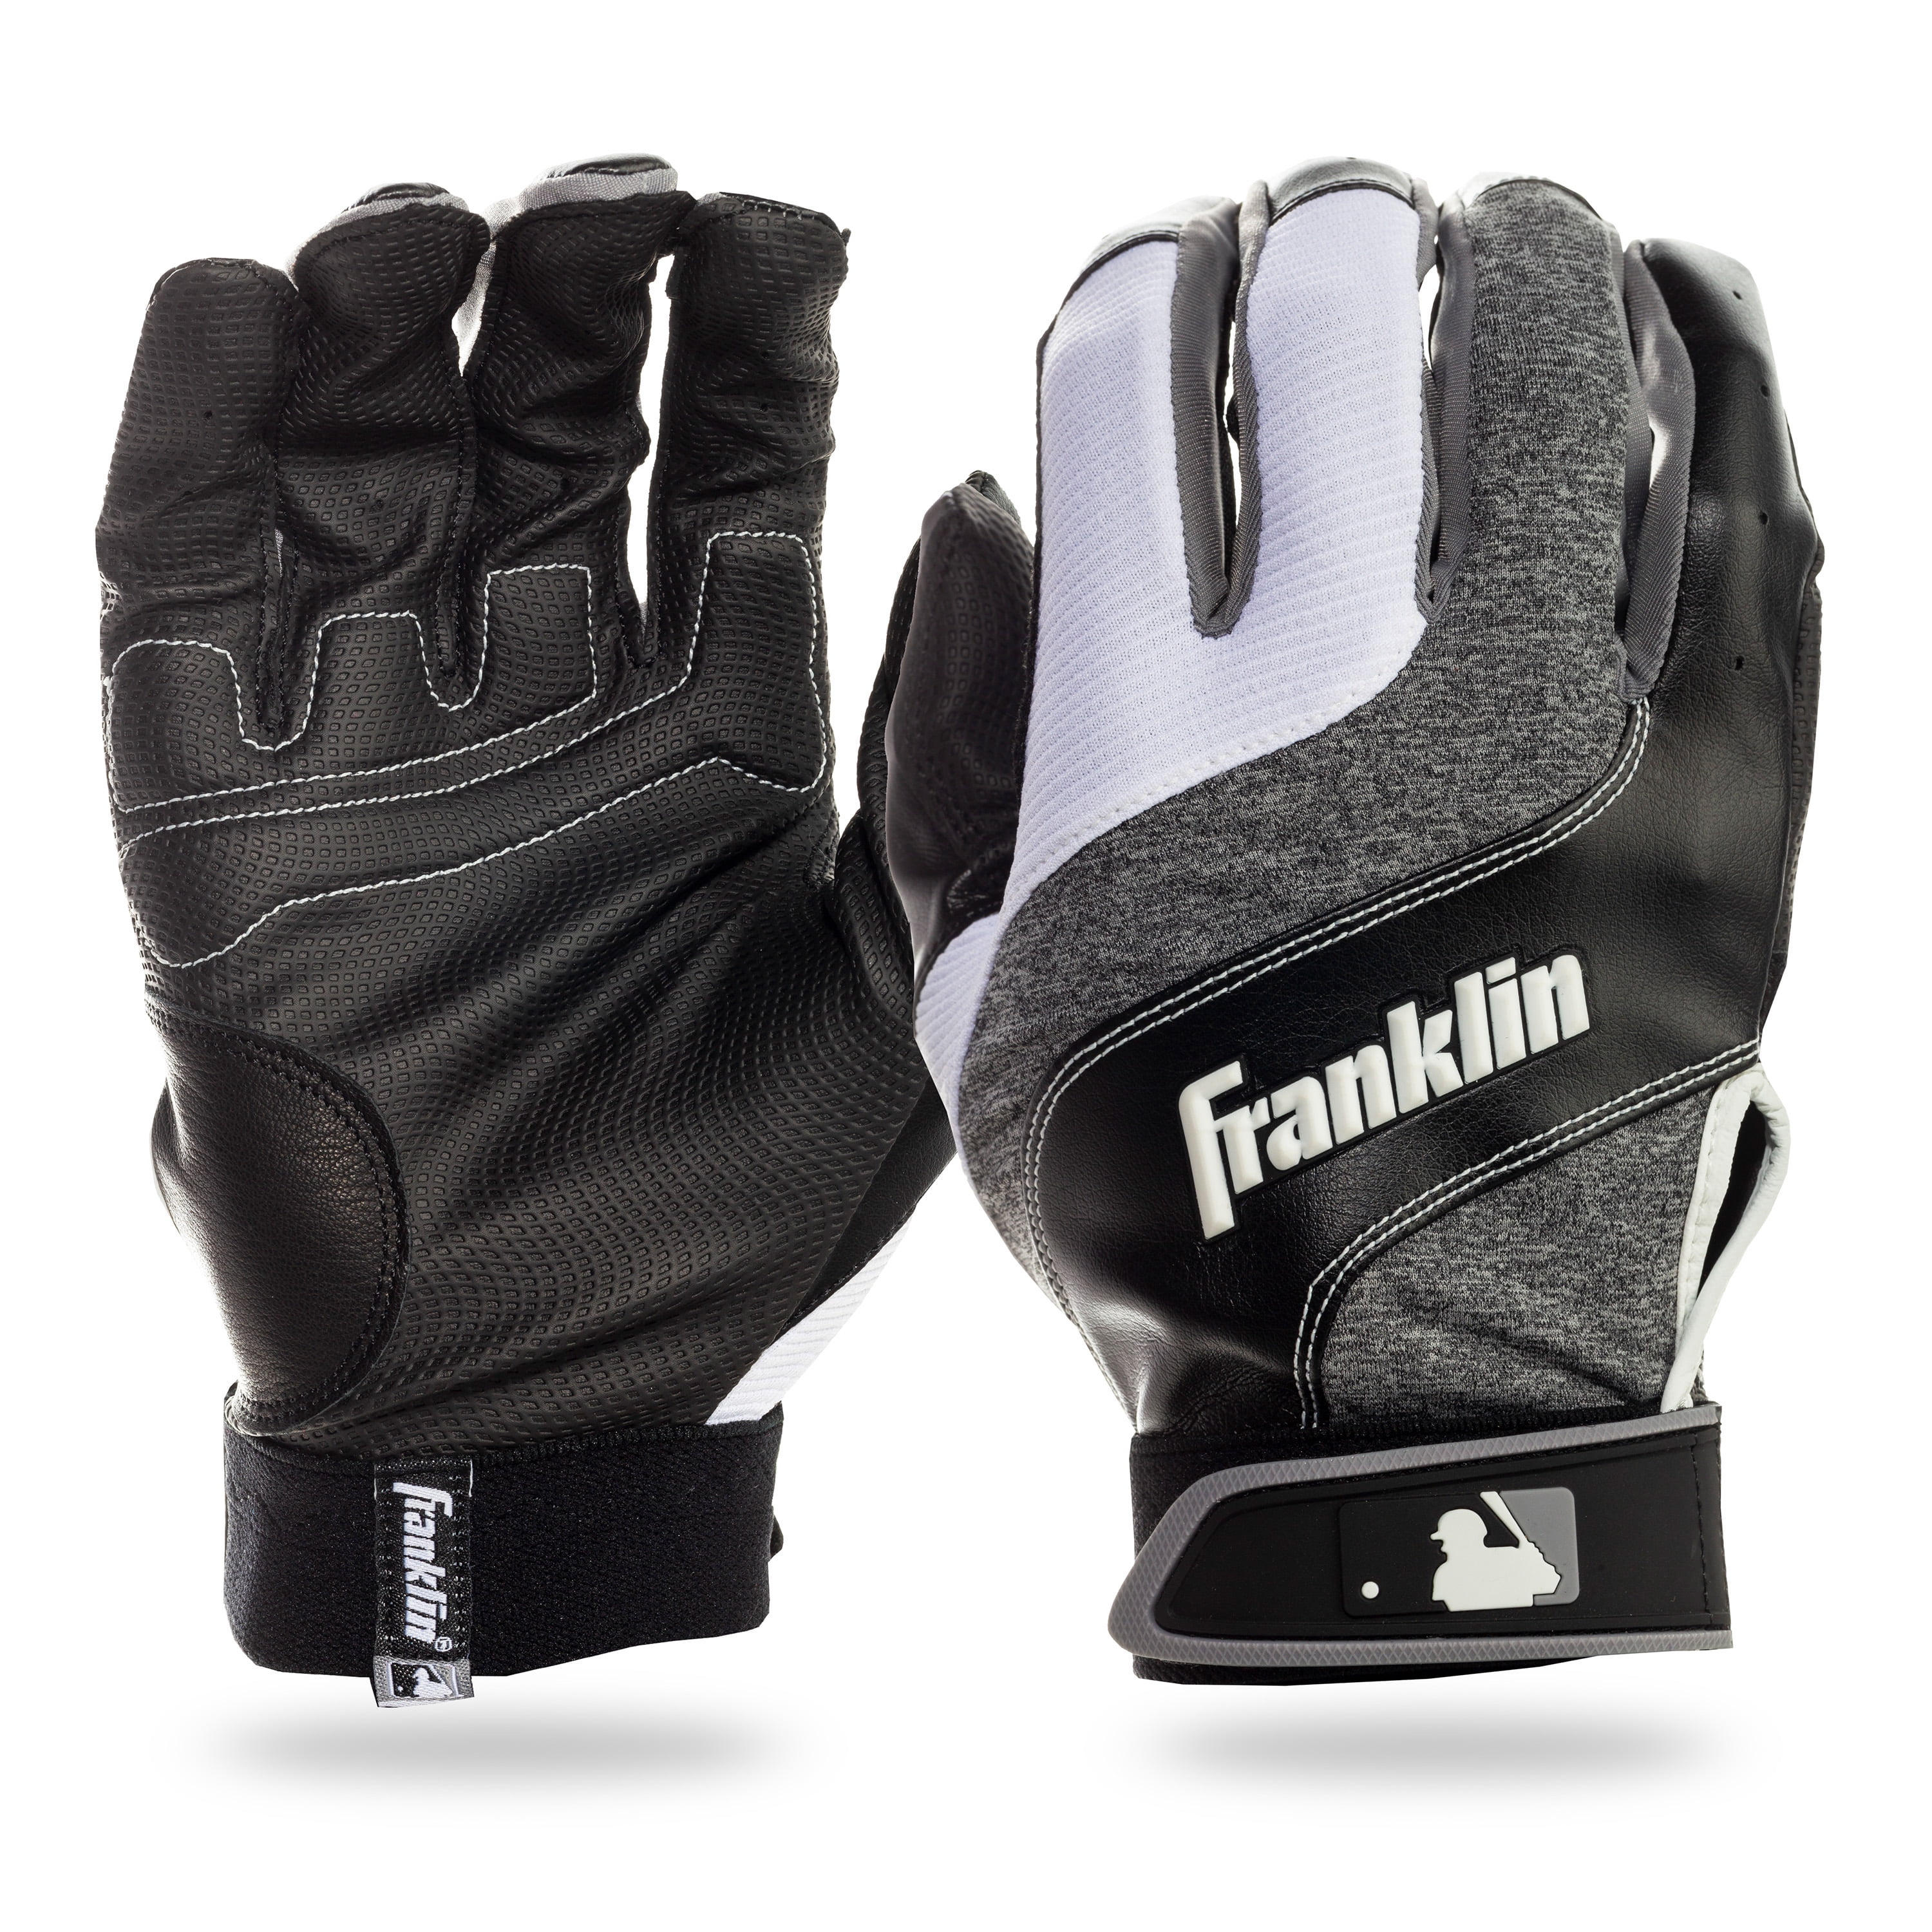 Adult New XL Franklin Pro Charger Batting Gloves Black/Blue/White 